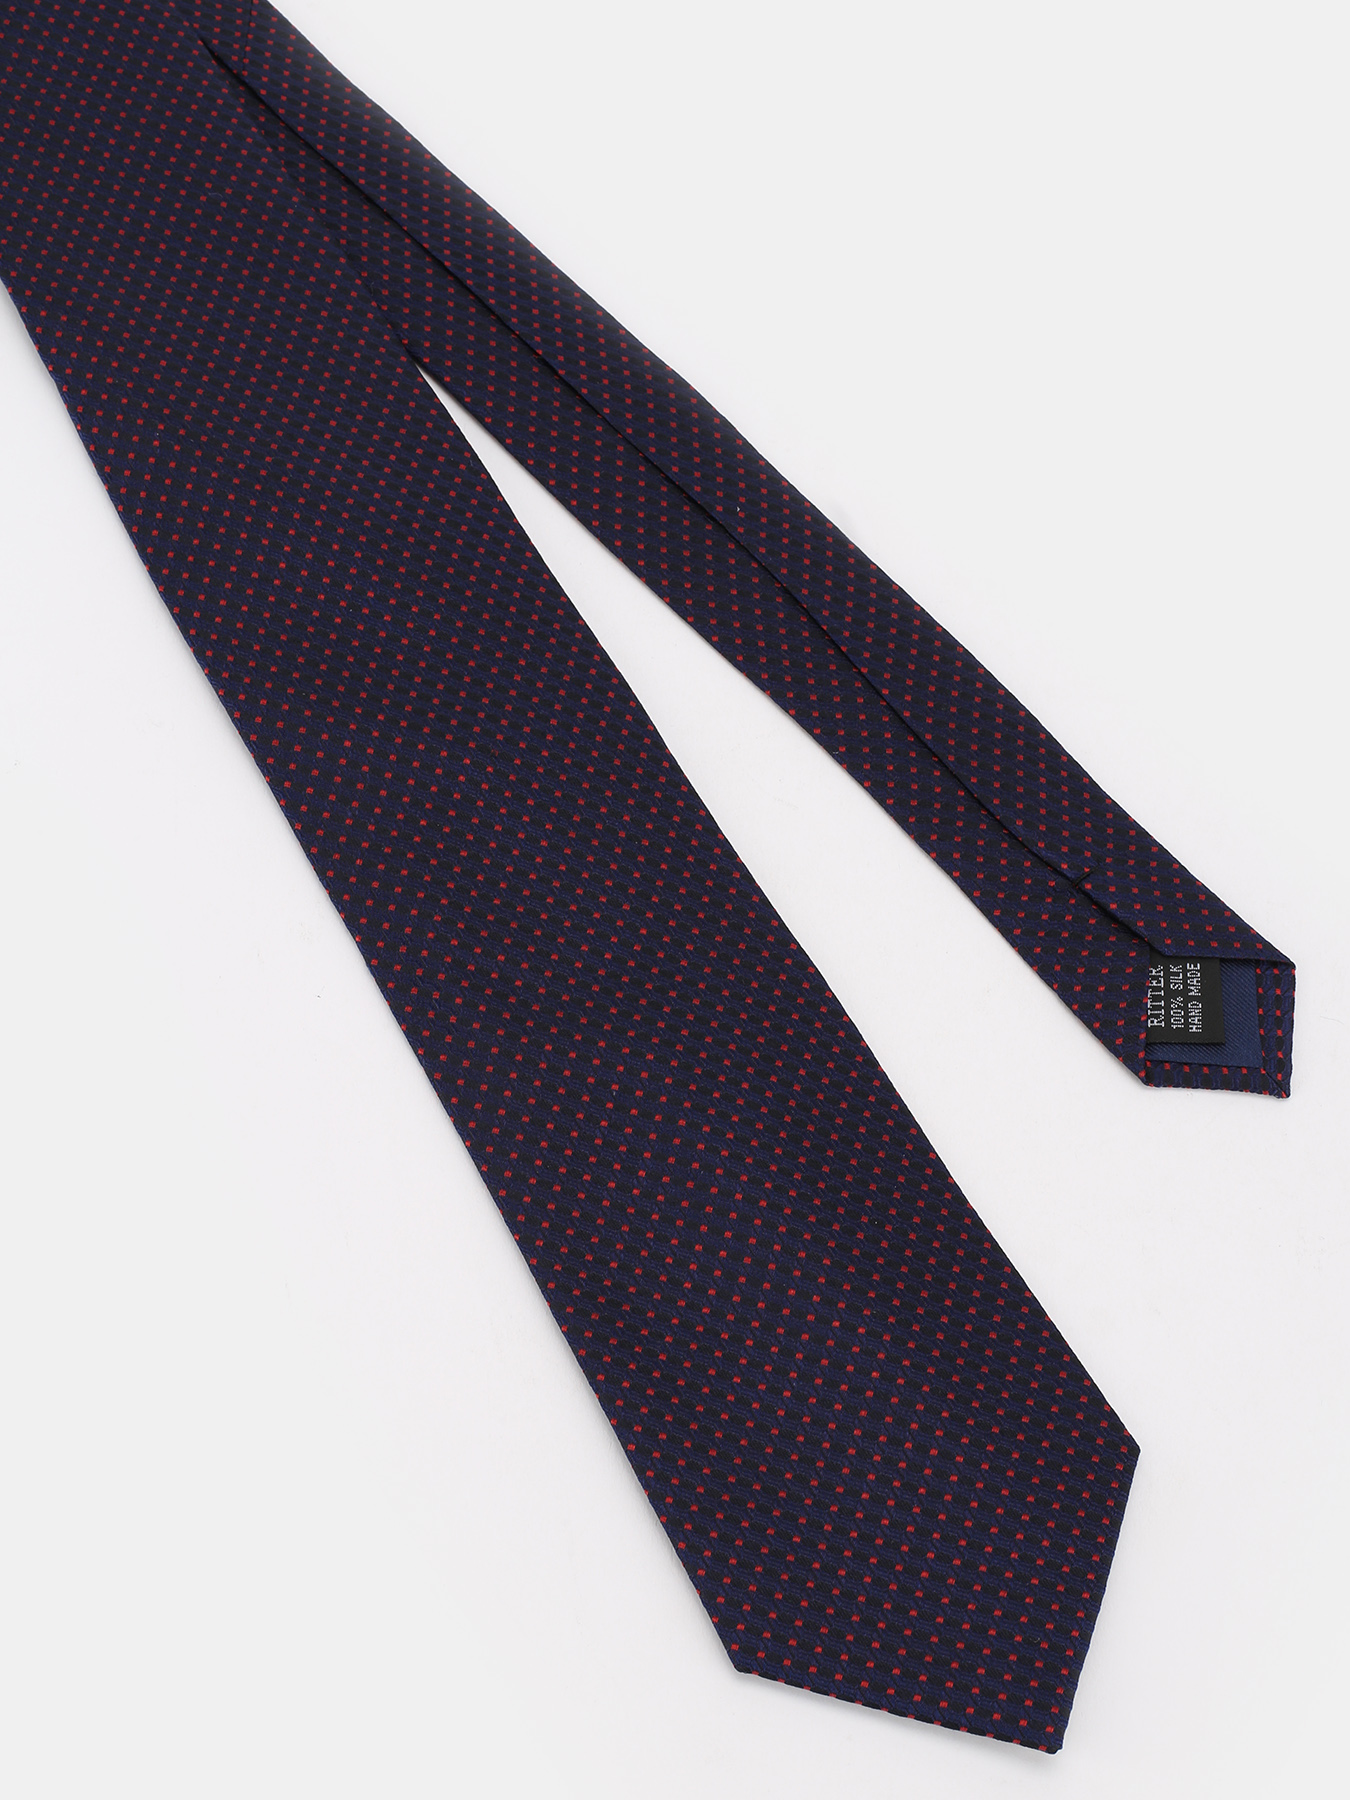 Ritter Шелковый галстук с узорами 323010-185 Фото 3